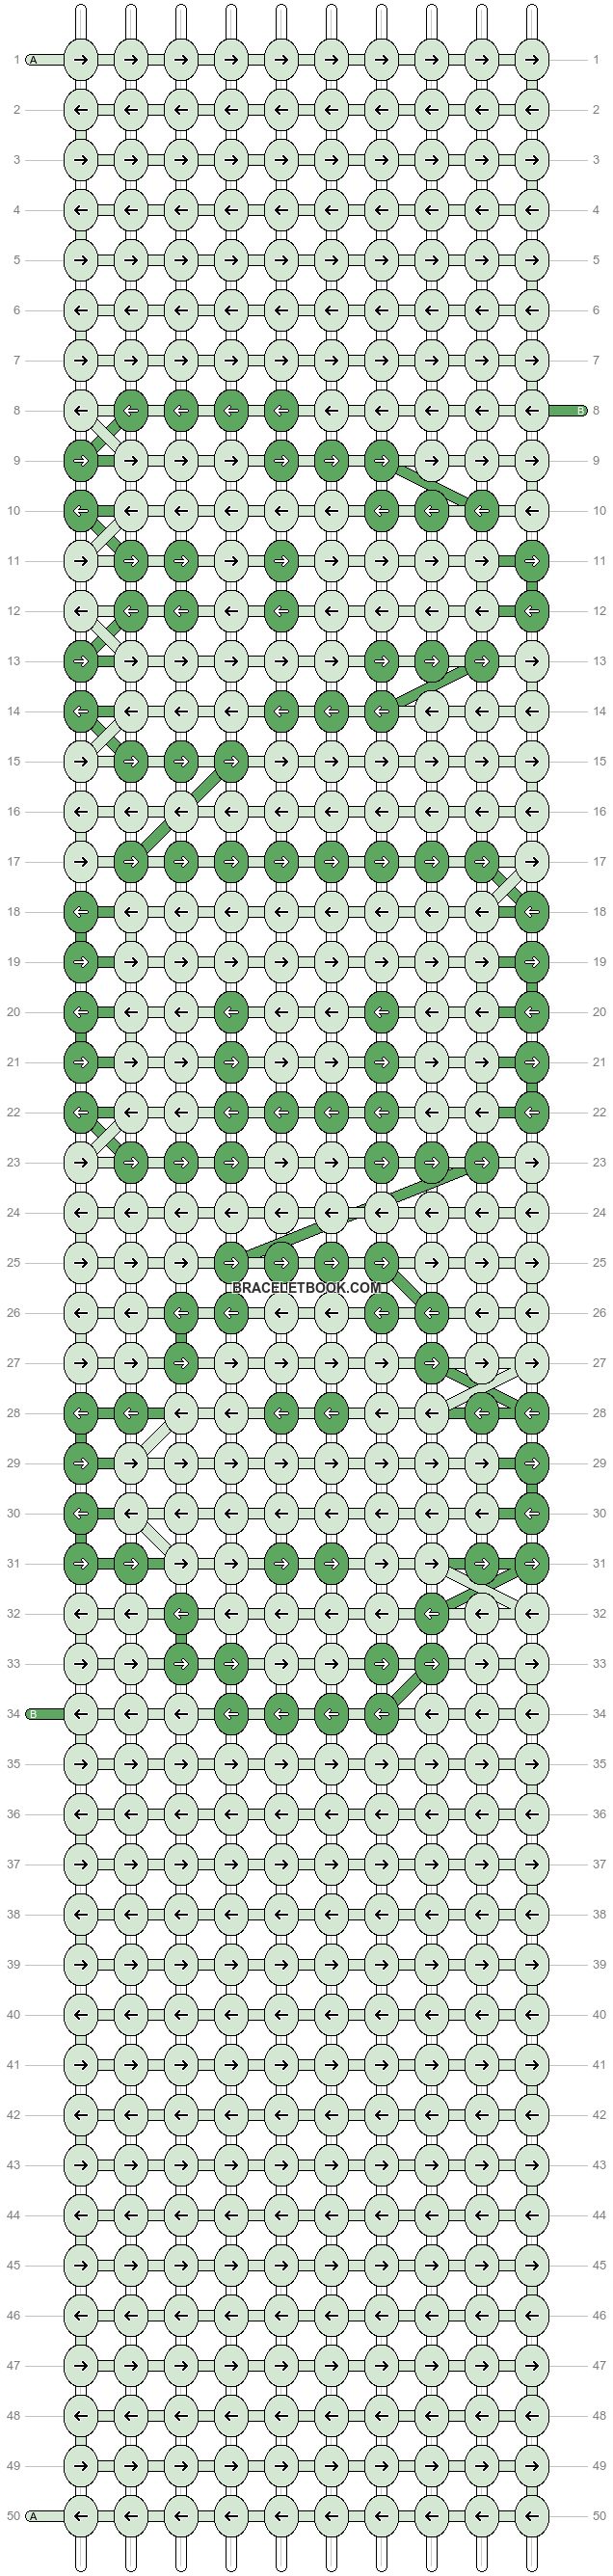 Alpha pattern #19657 pattern